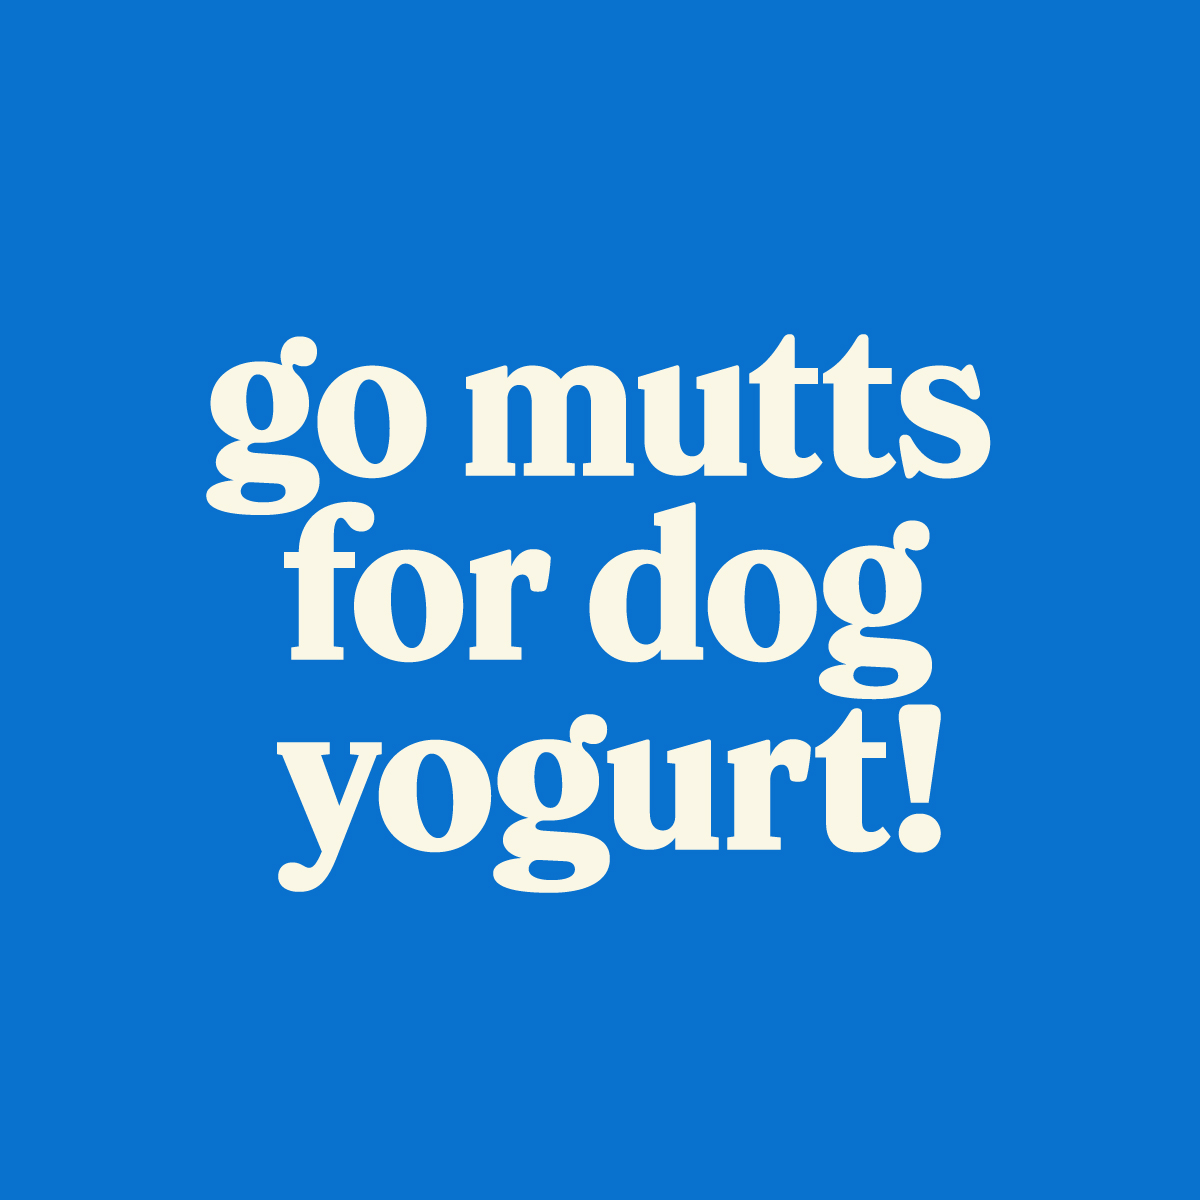 Chobani Daily Dollop - Brand Personality: Go mutts for dog yogurt!